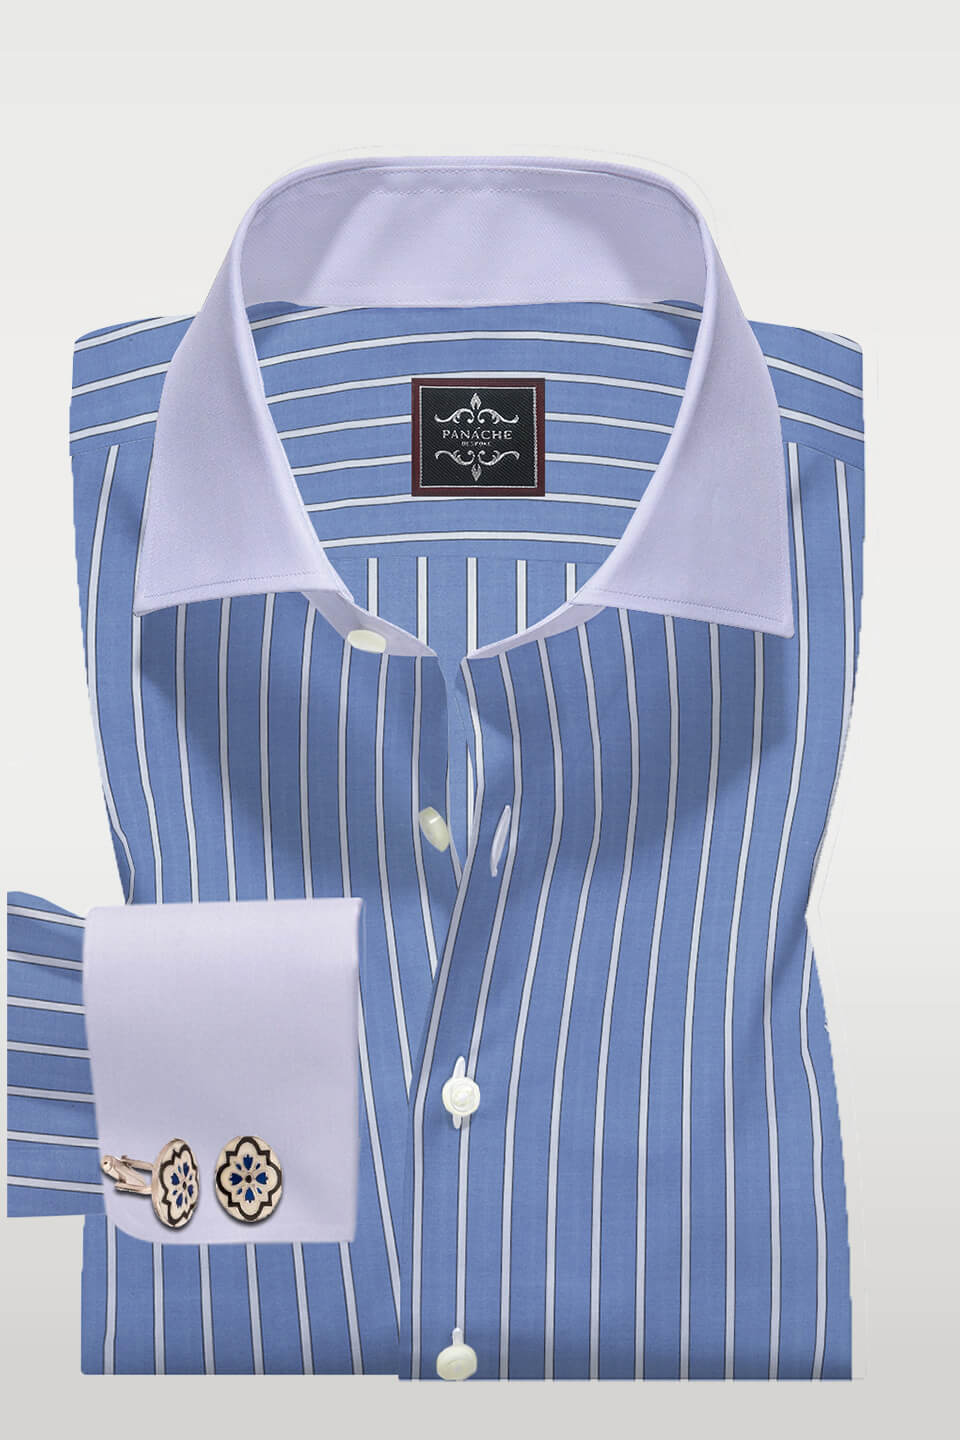 Mens stripes shirts | Blue and white stripes shirt | Mens Dress shirts ...